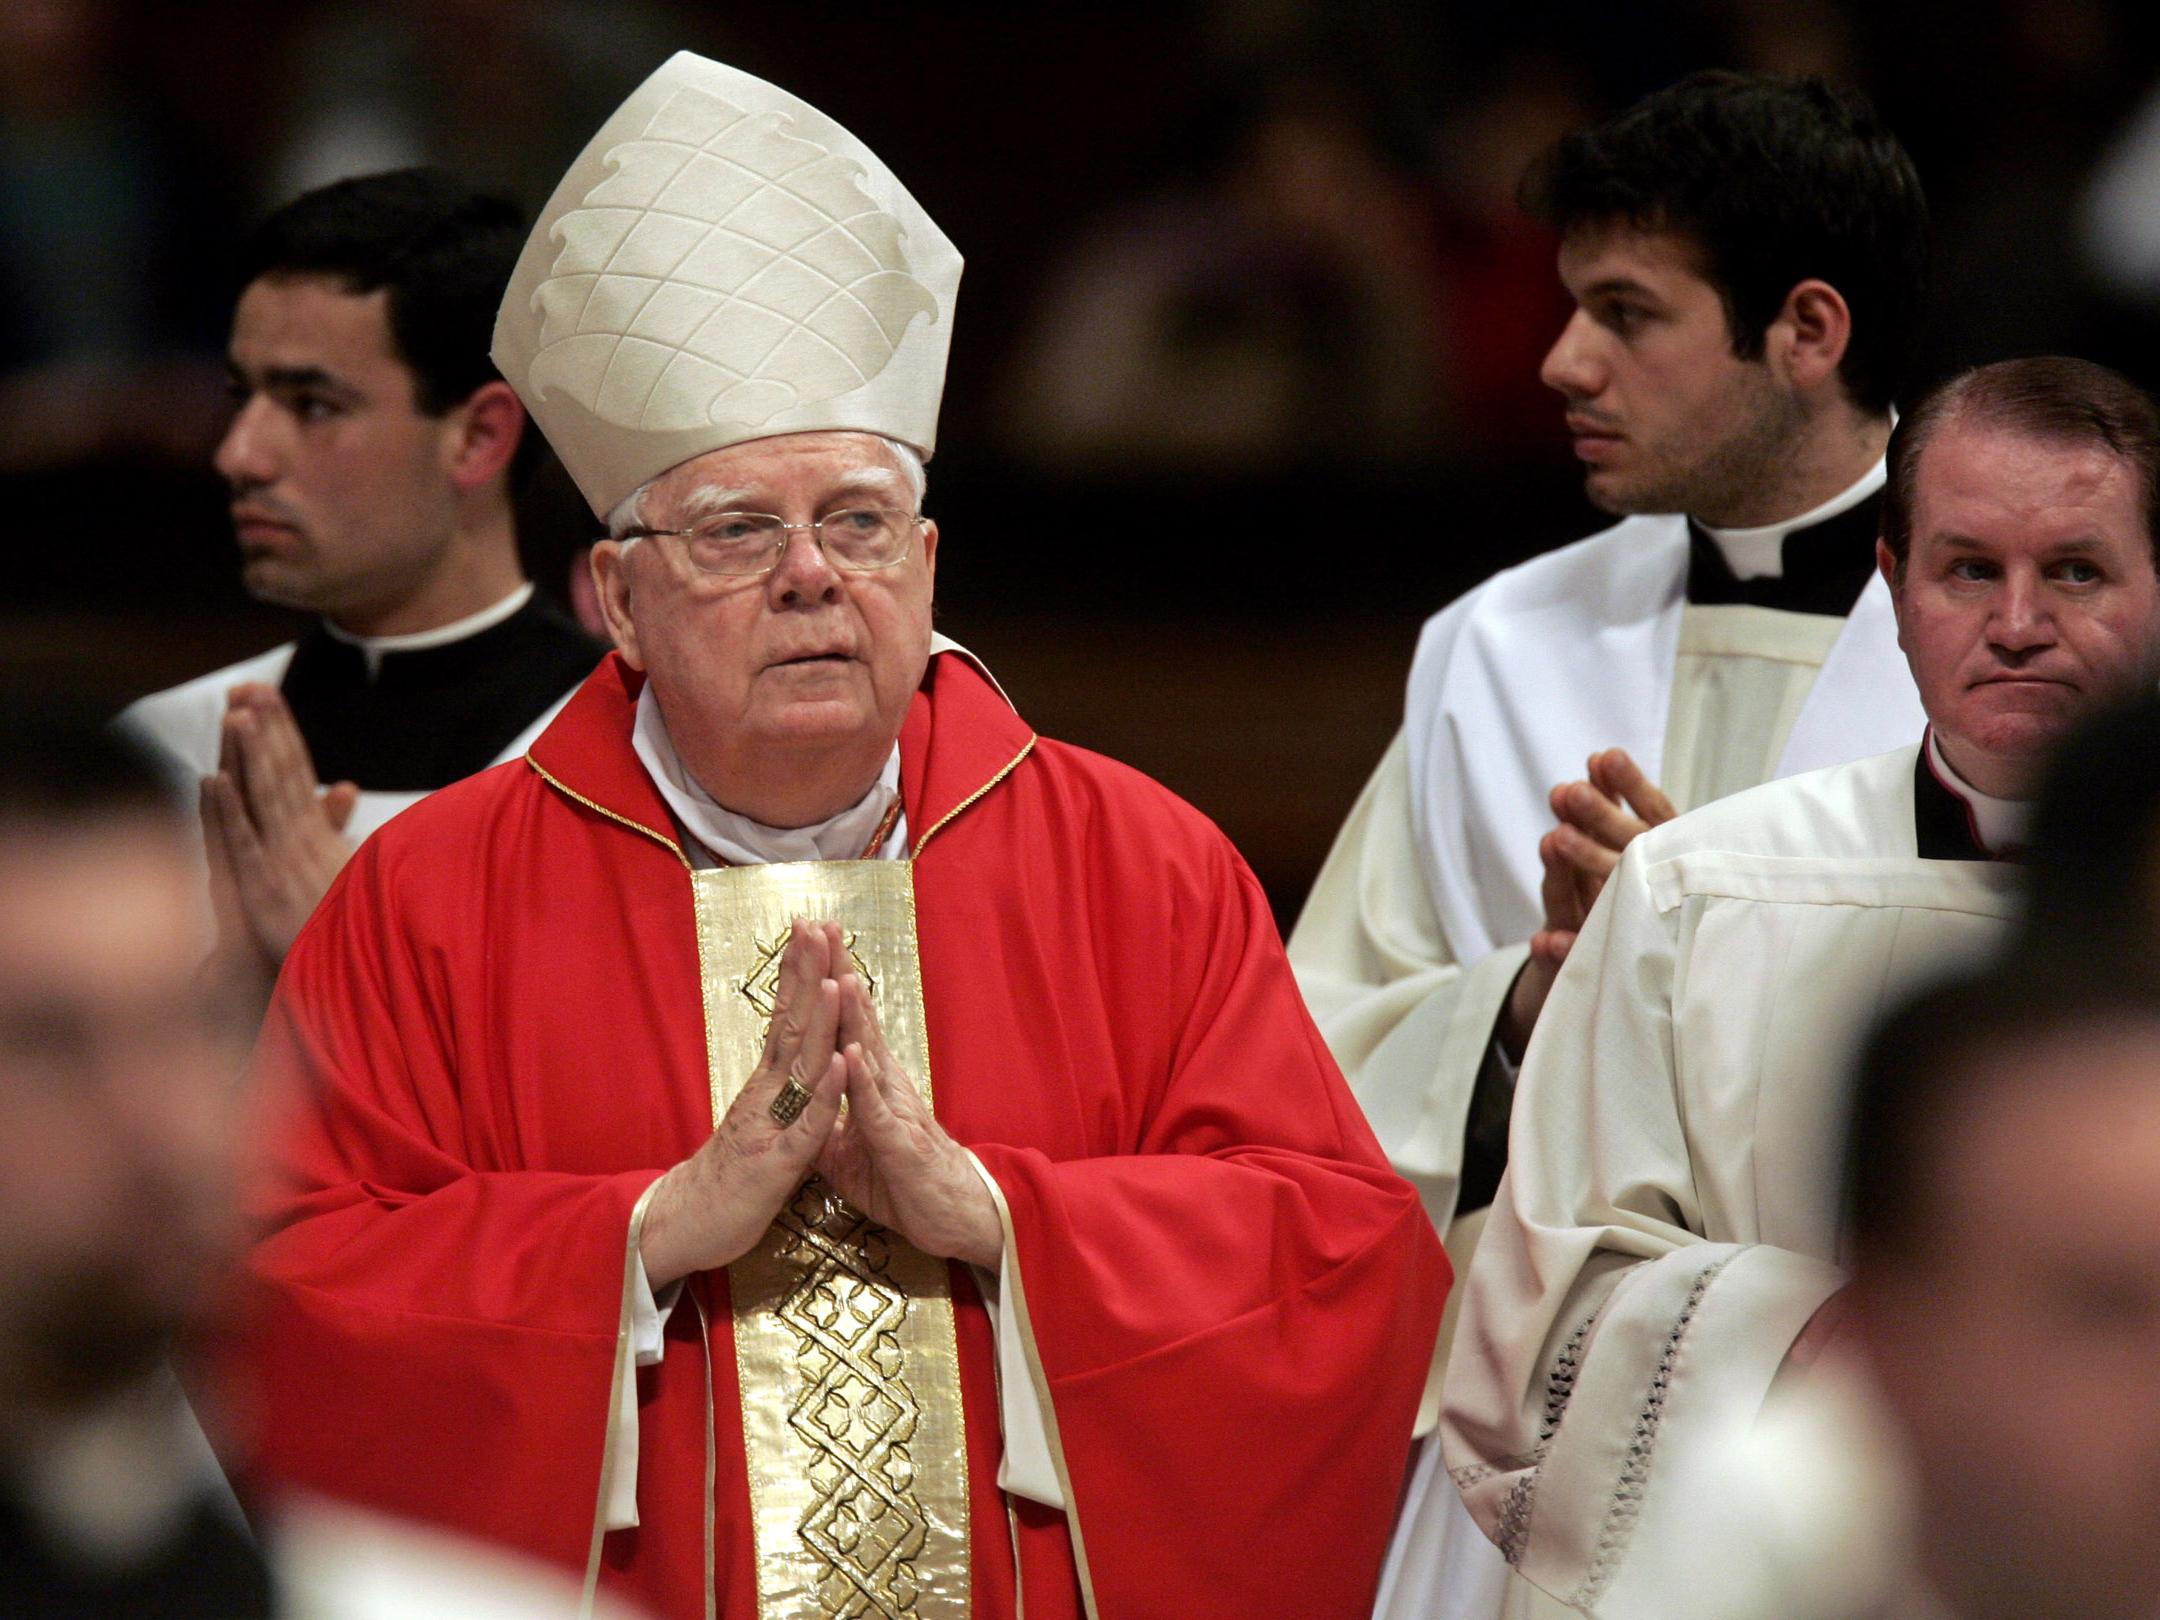 US Cardinal Bernard Law presides over a Vatican Mass in St Peter’s Basilica in 2005